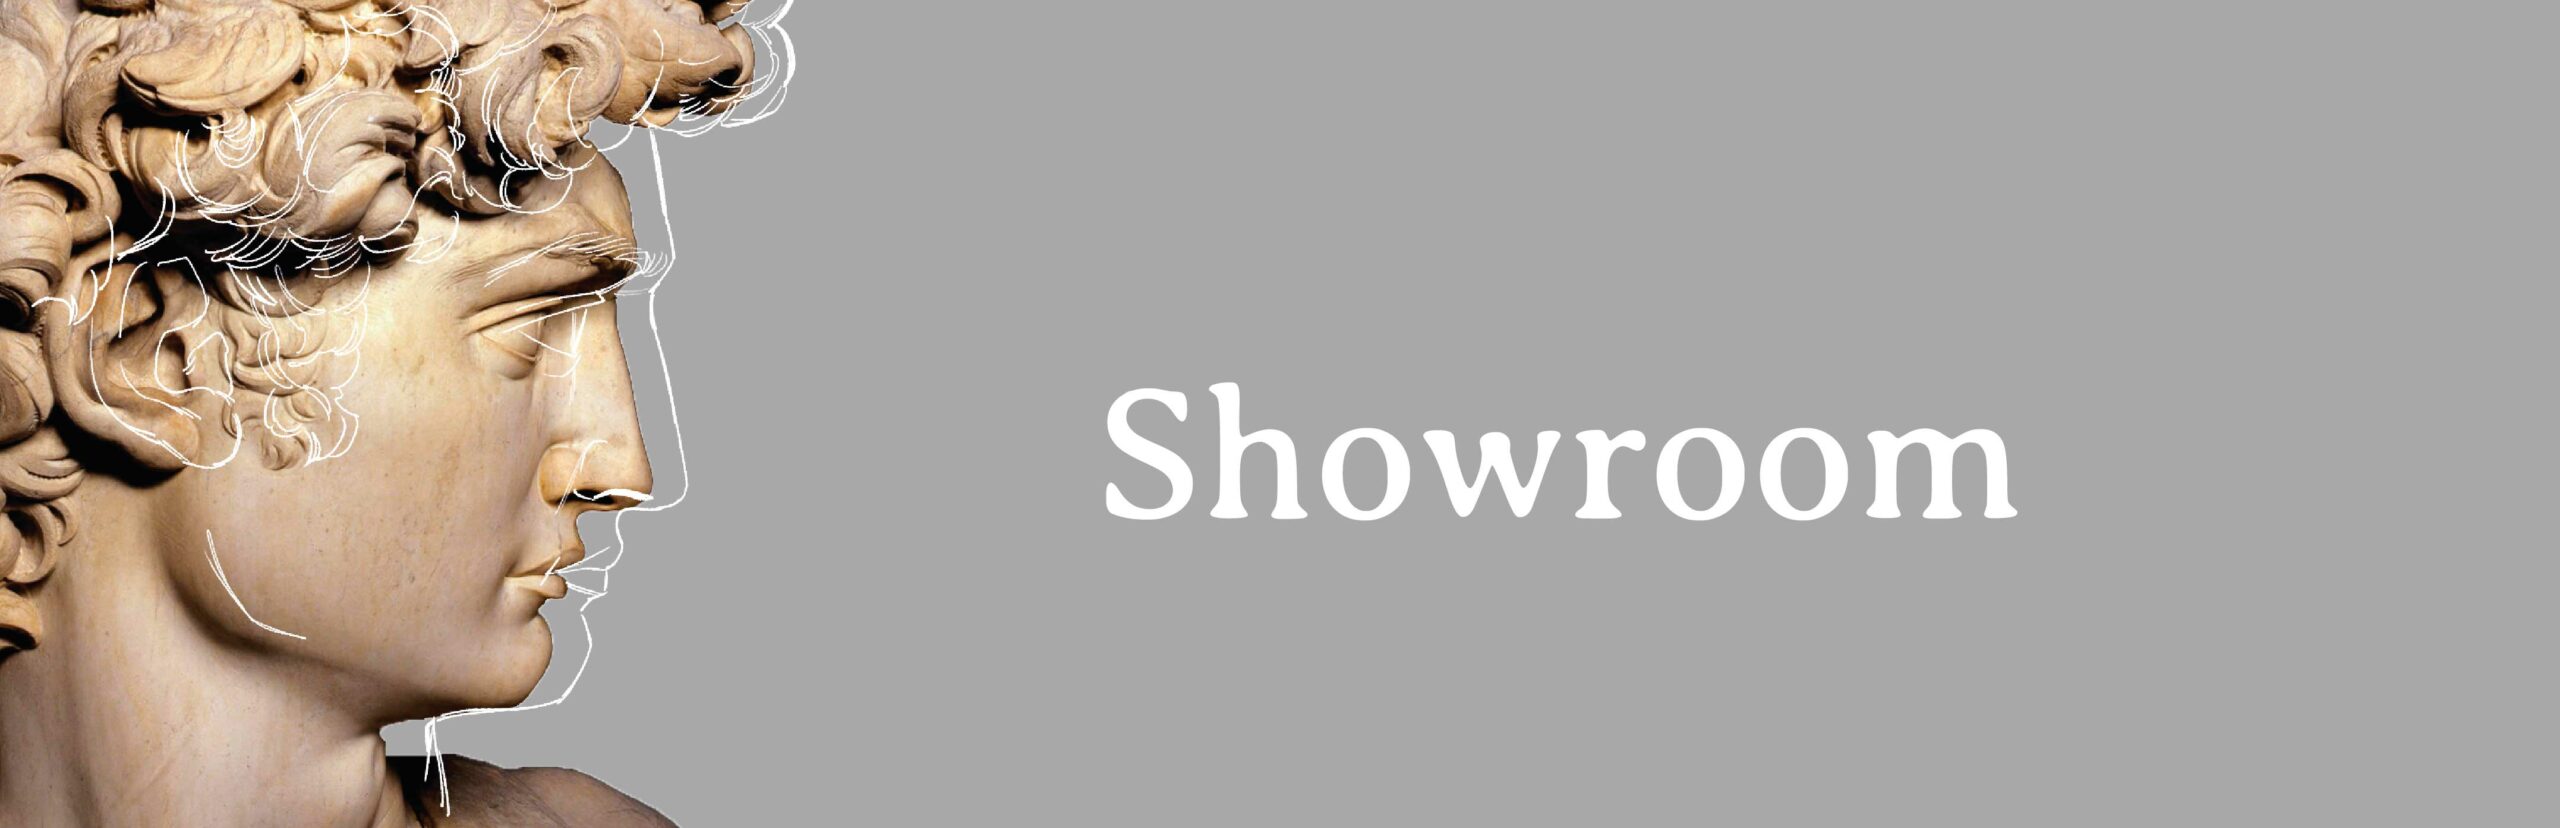 SHOWROOM_1